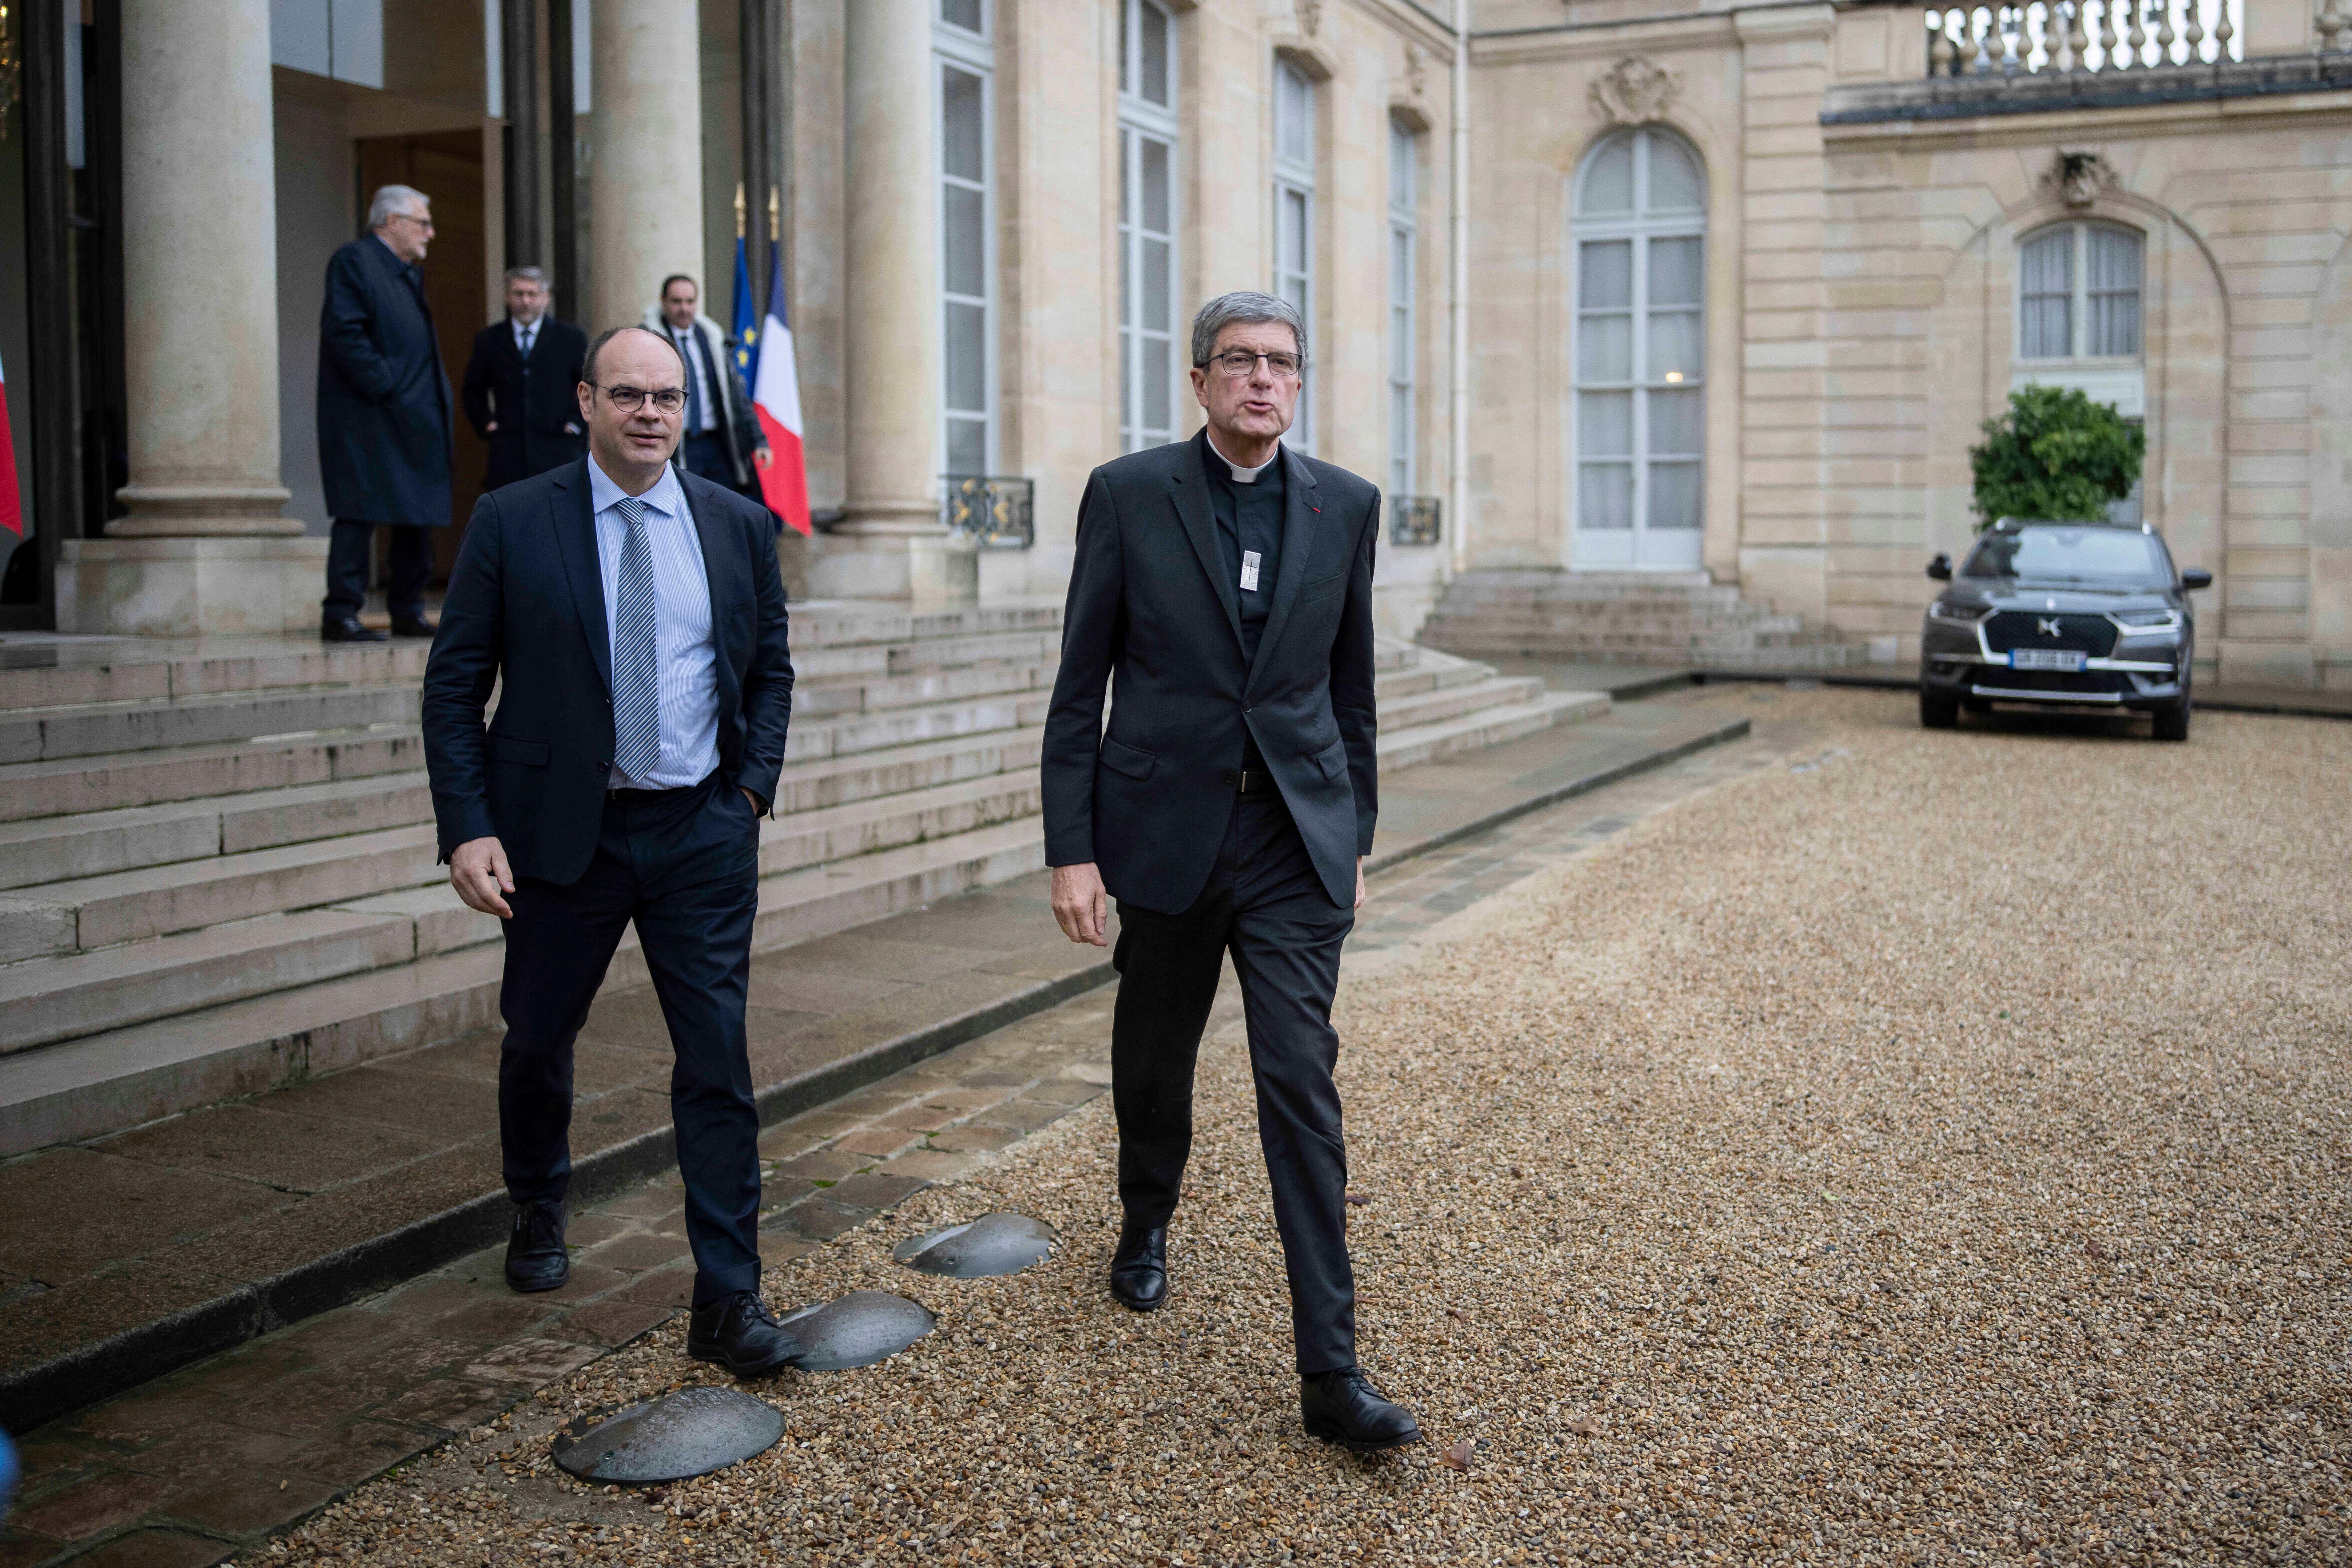 Church condemns Macron’s ‘deceitful’ end-of-life bill